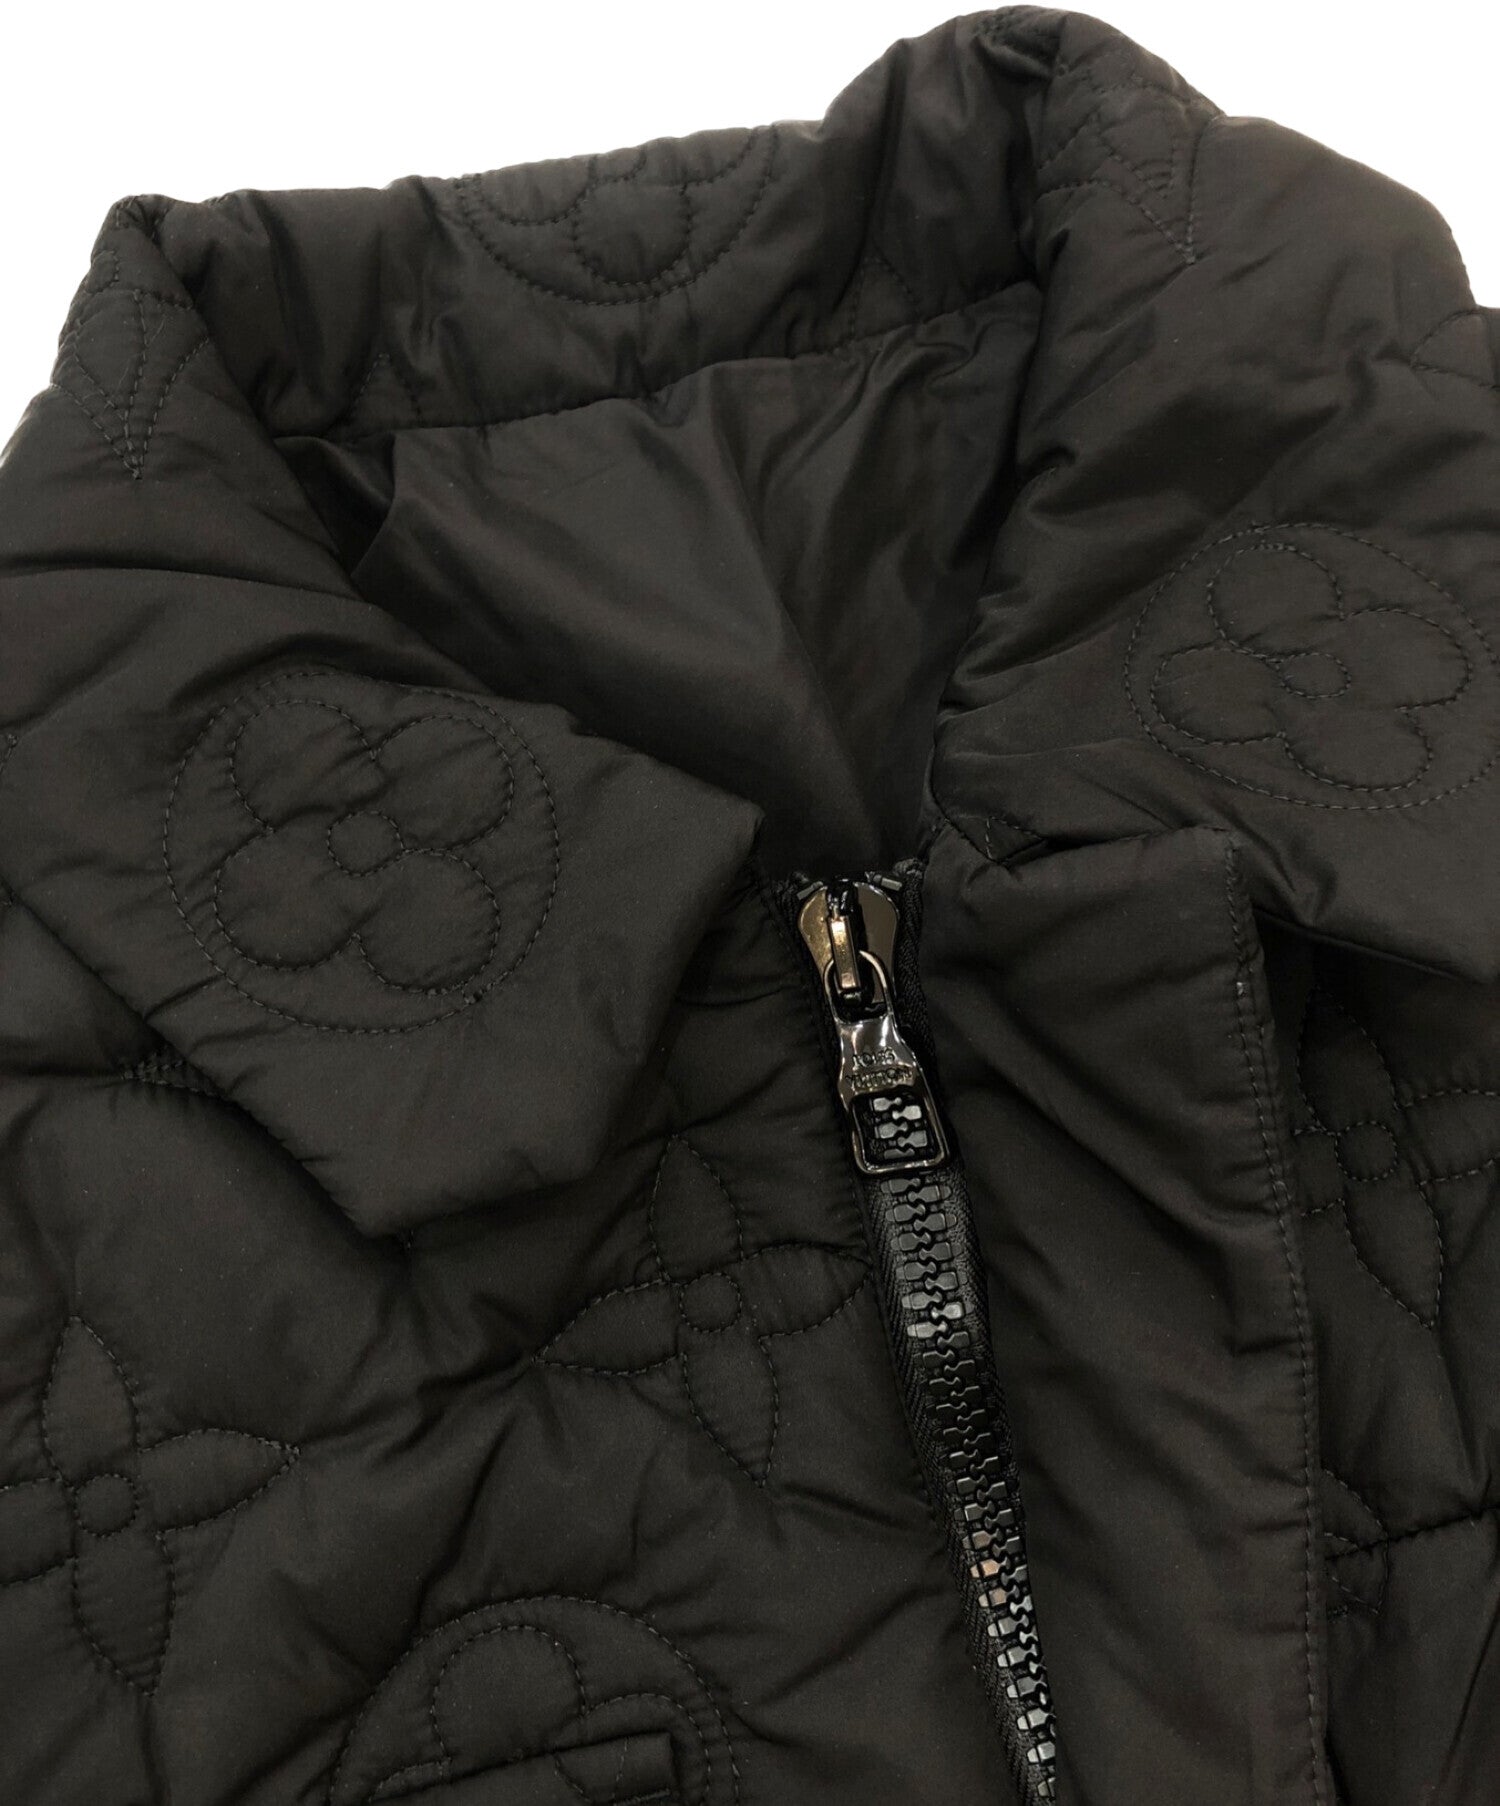 Louis Vuitton x Murakami Reversible jacket